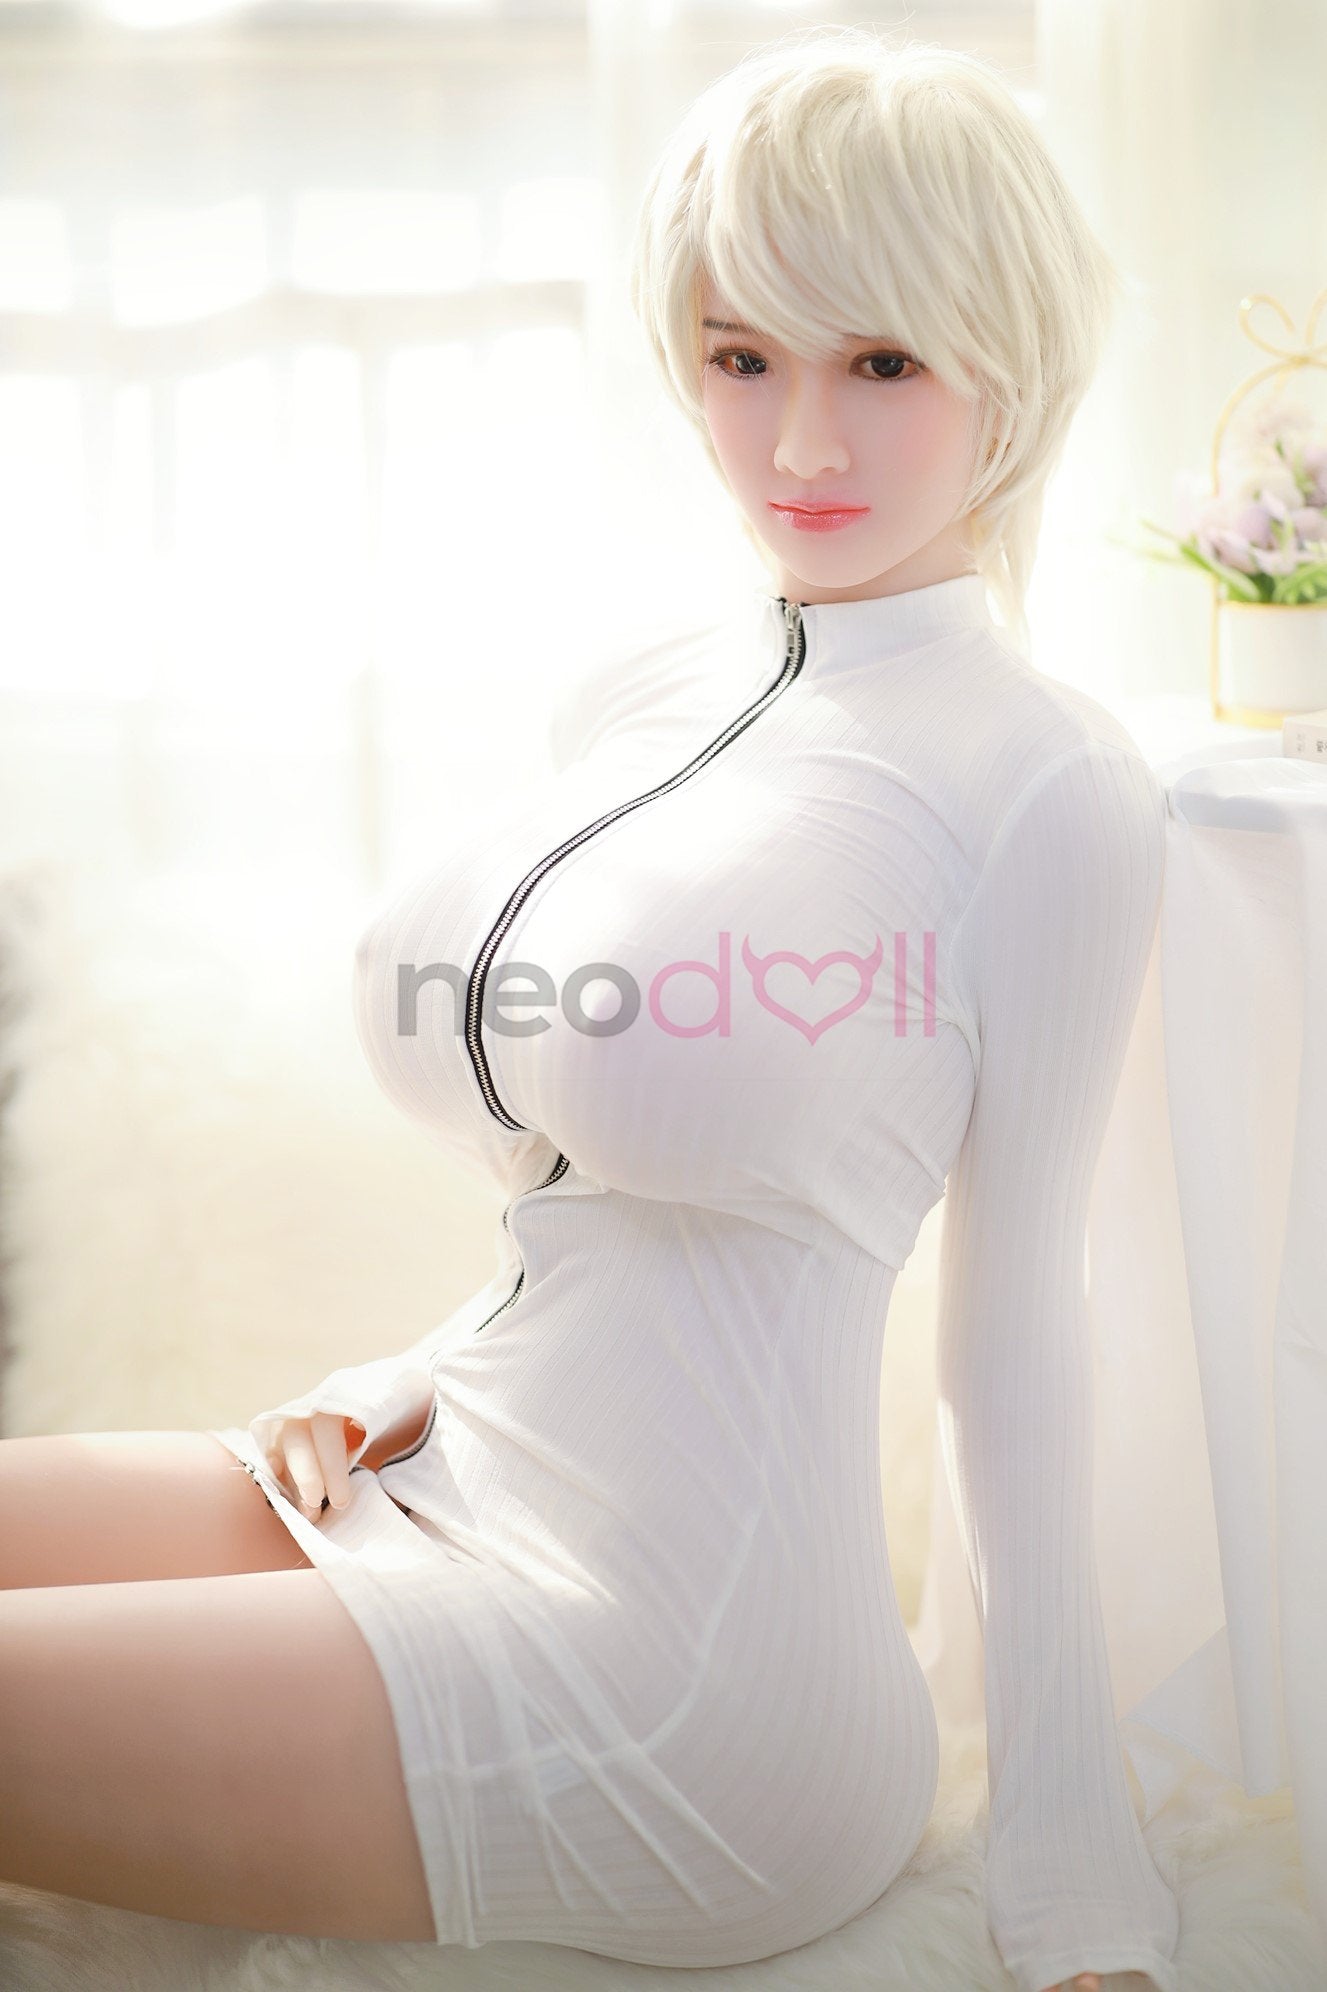 Neodoll Sugar Babe - Everly - Realistic Sex Doll - Gel Breast - Uterus - 164cm - Natural